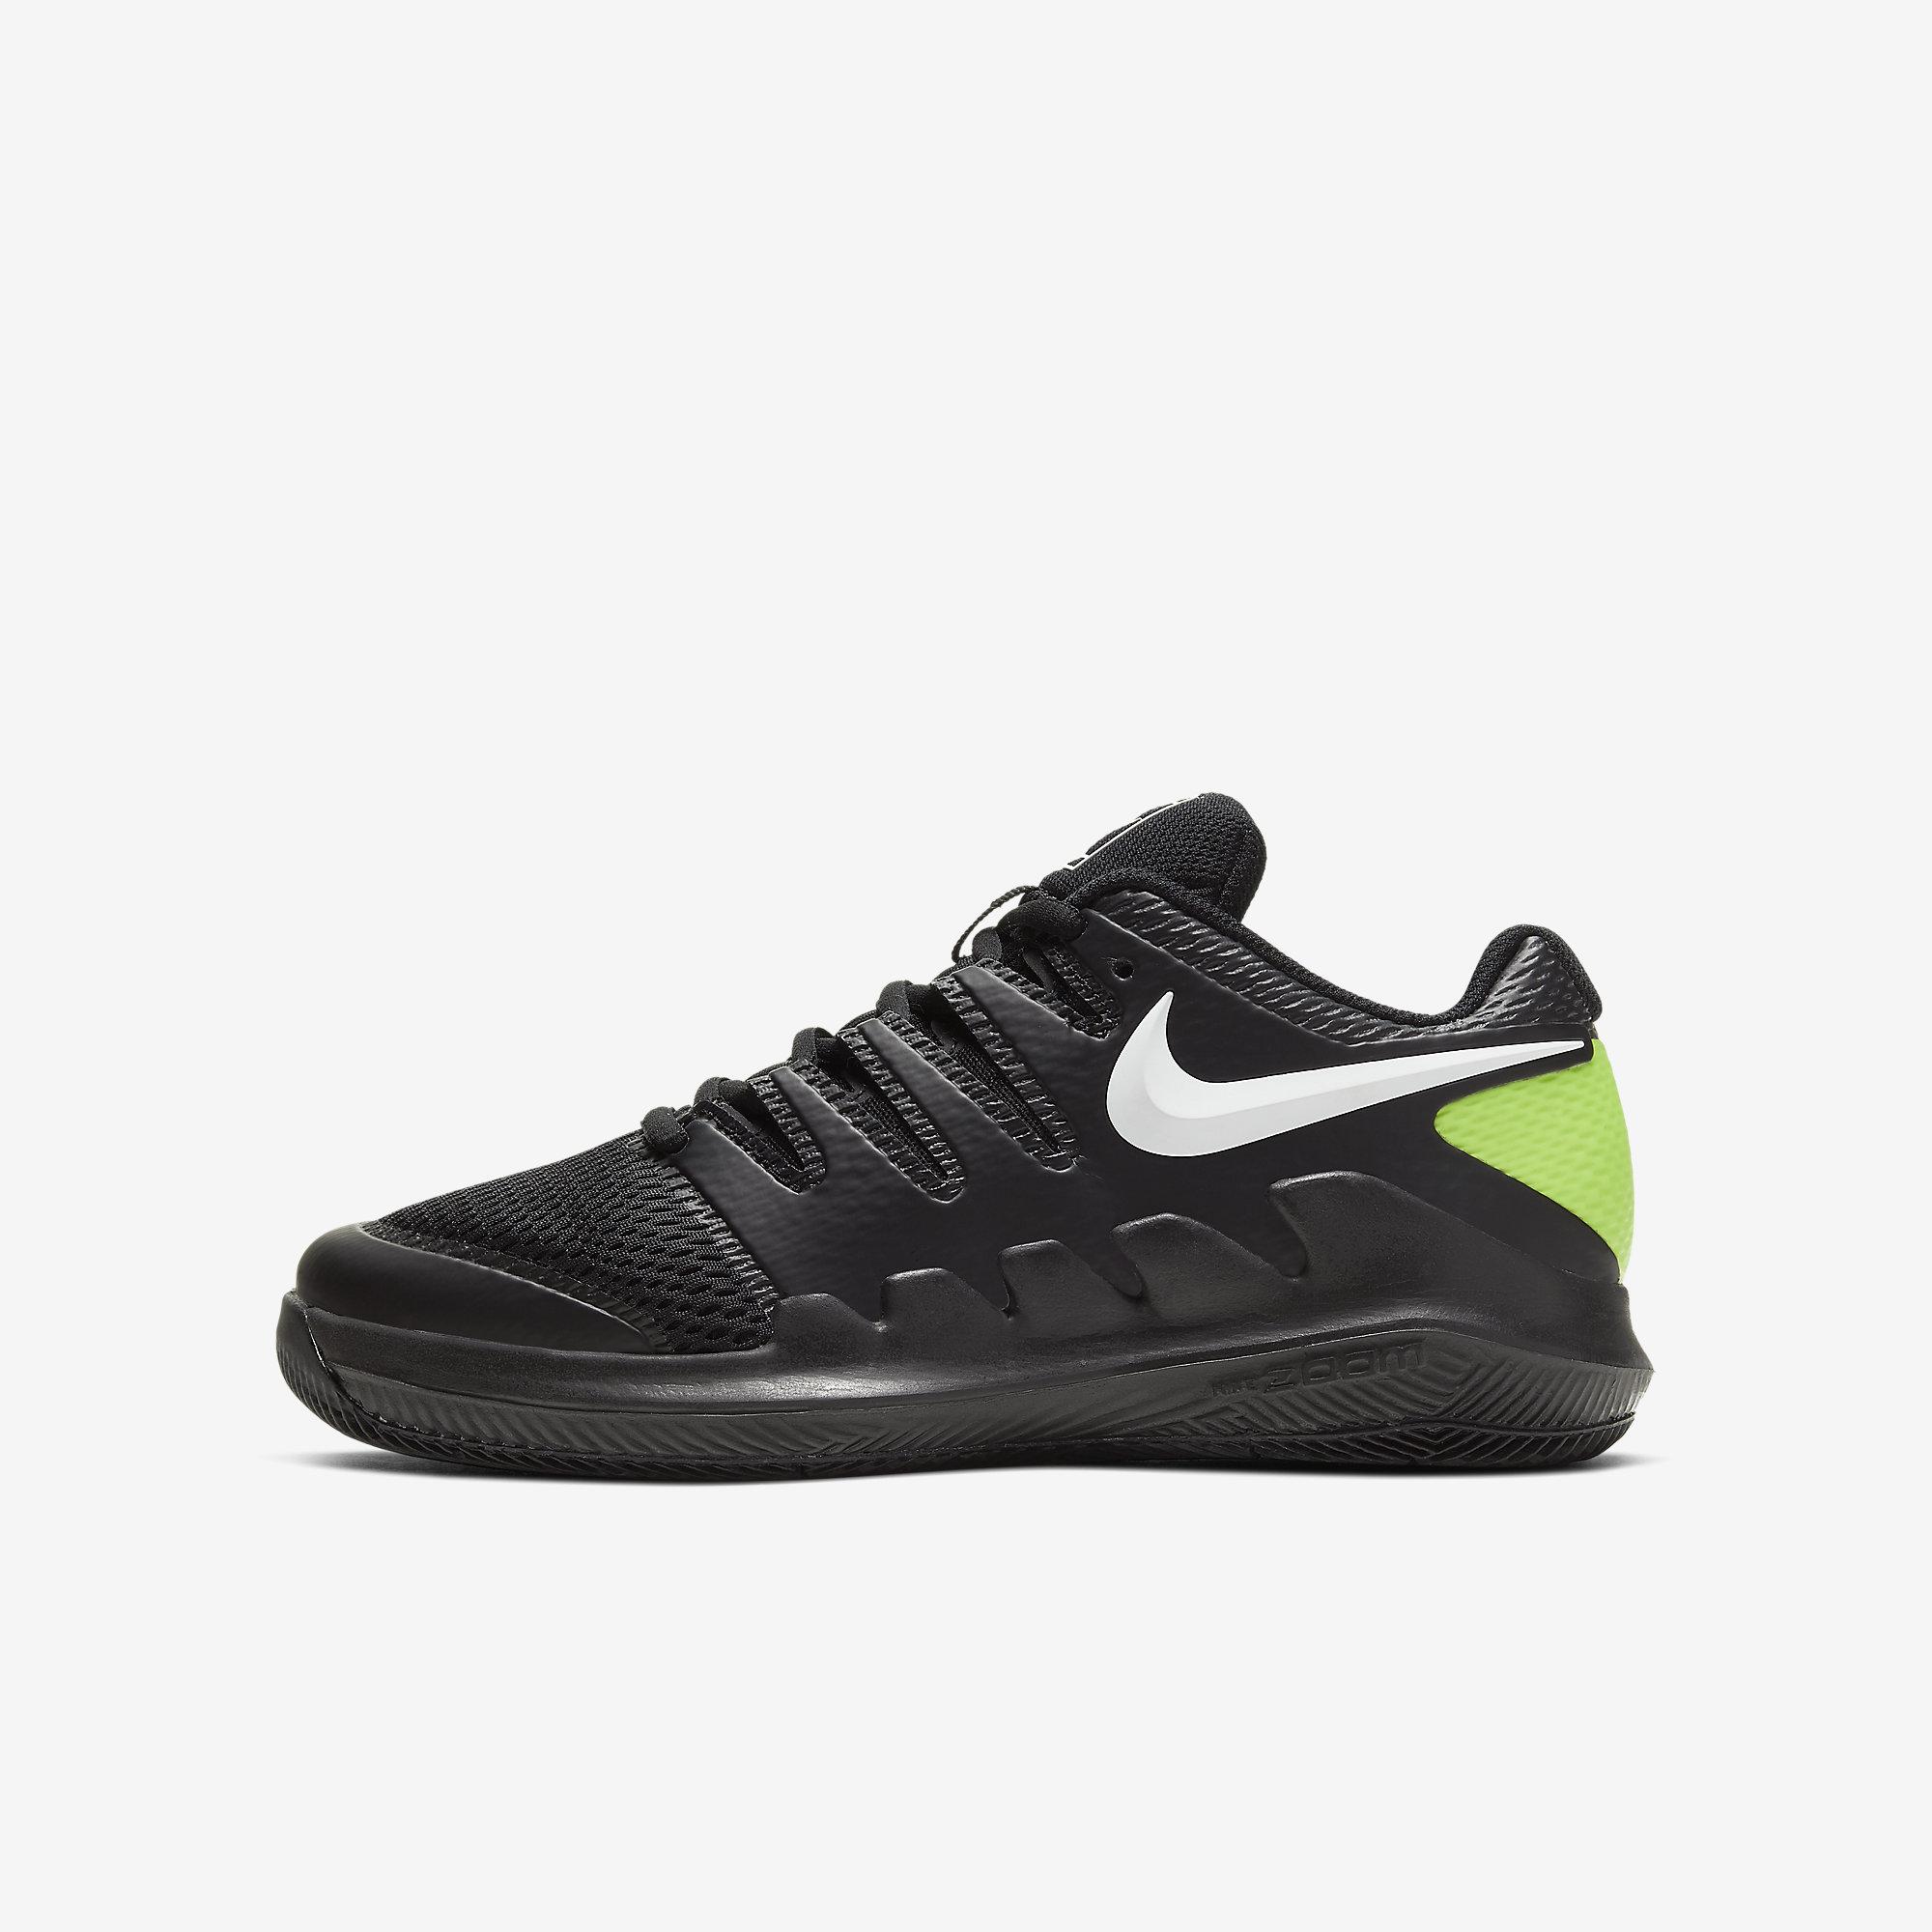 Nike Kids Vapor X Tennis Shoes - Black/White/Volt - Tennisnuts.com